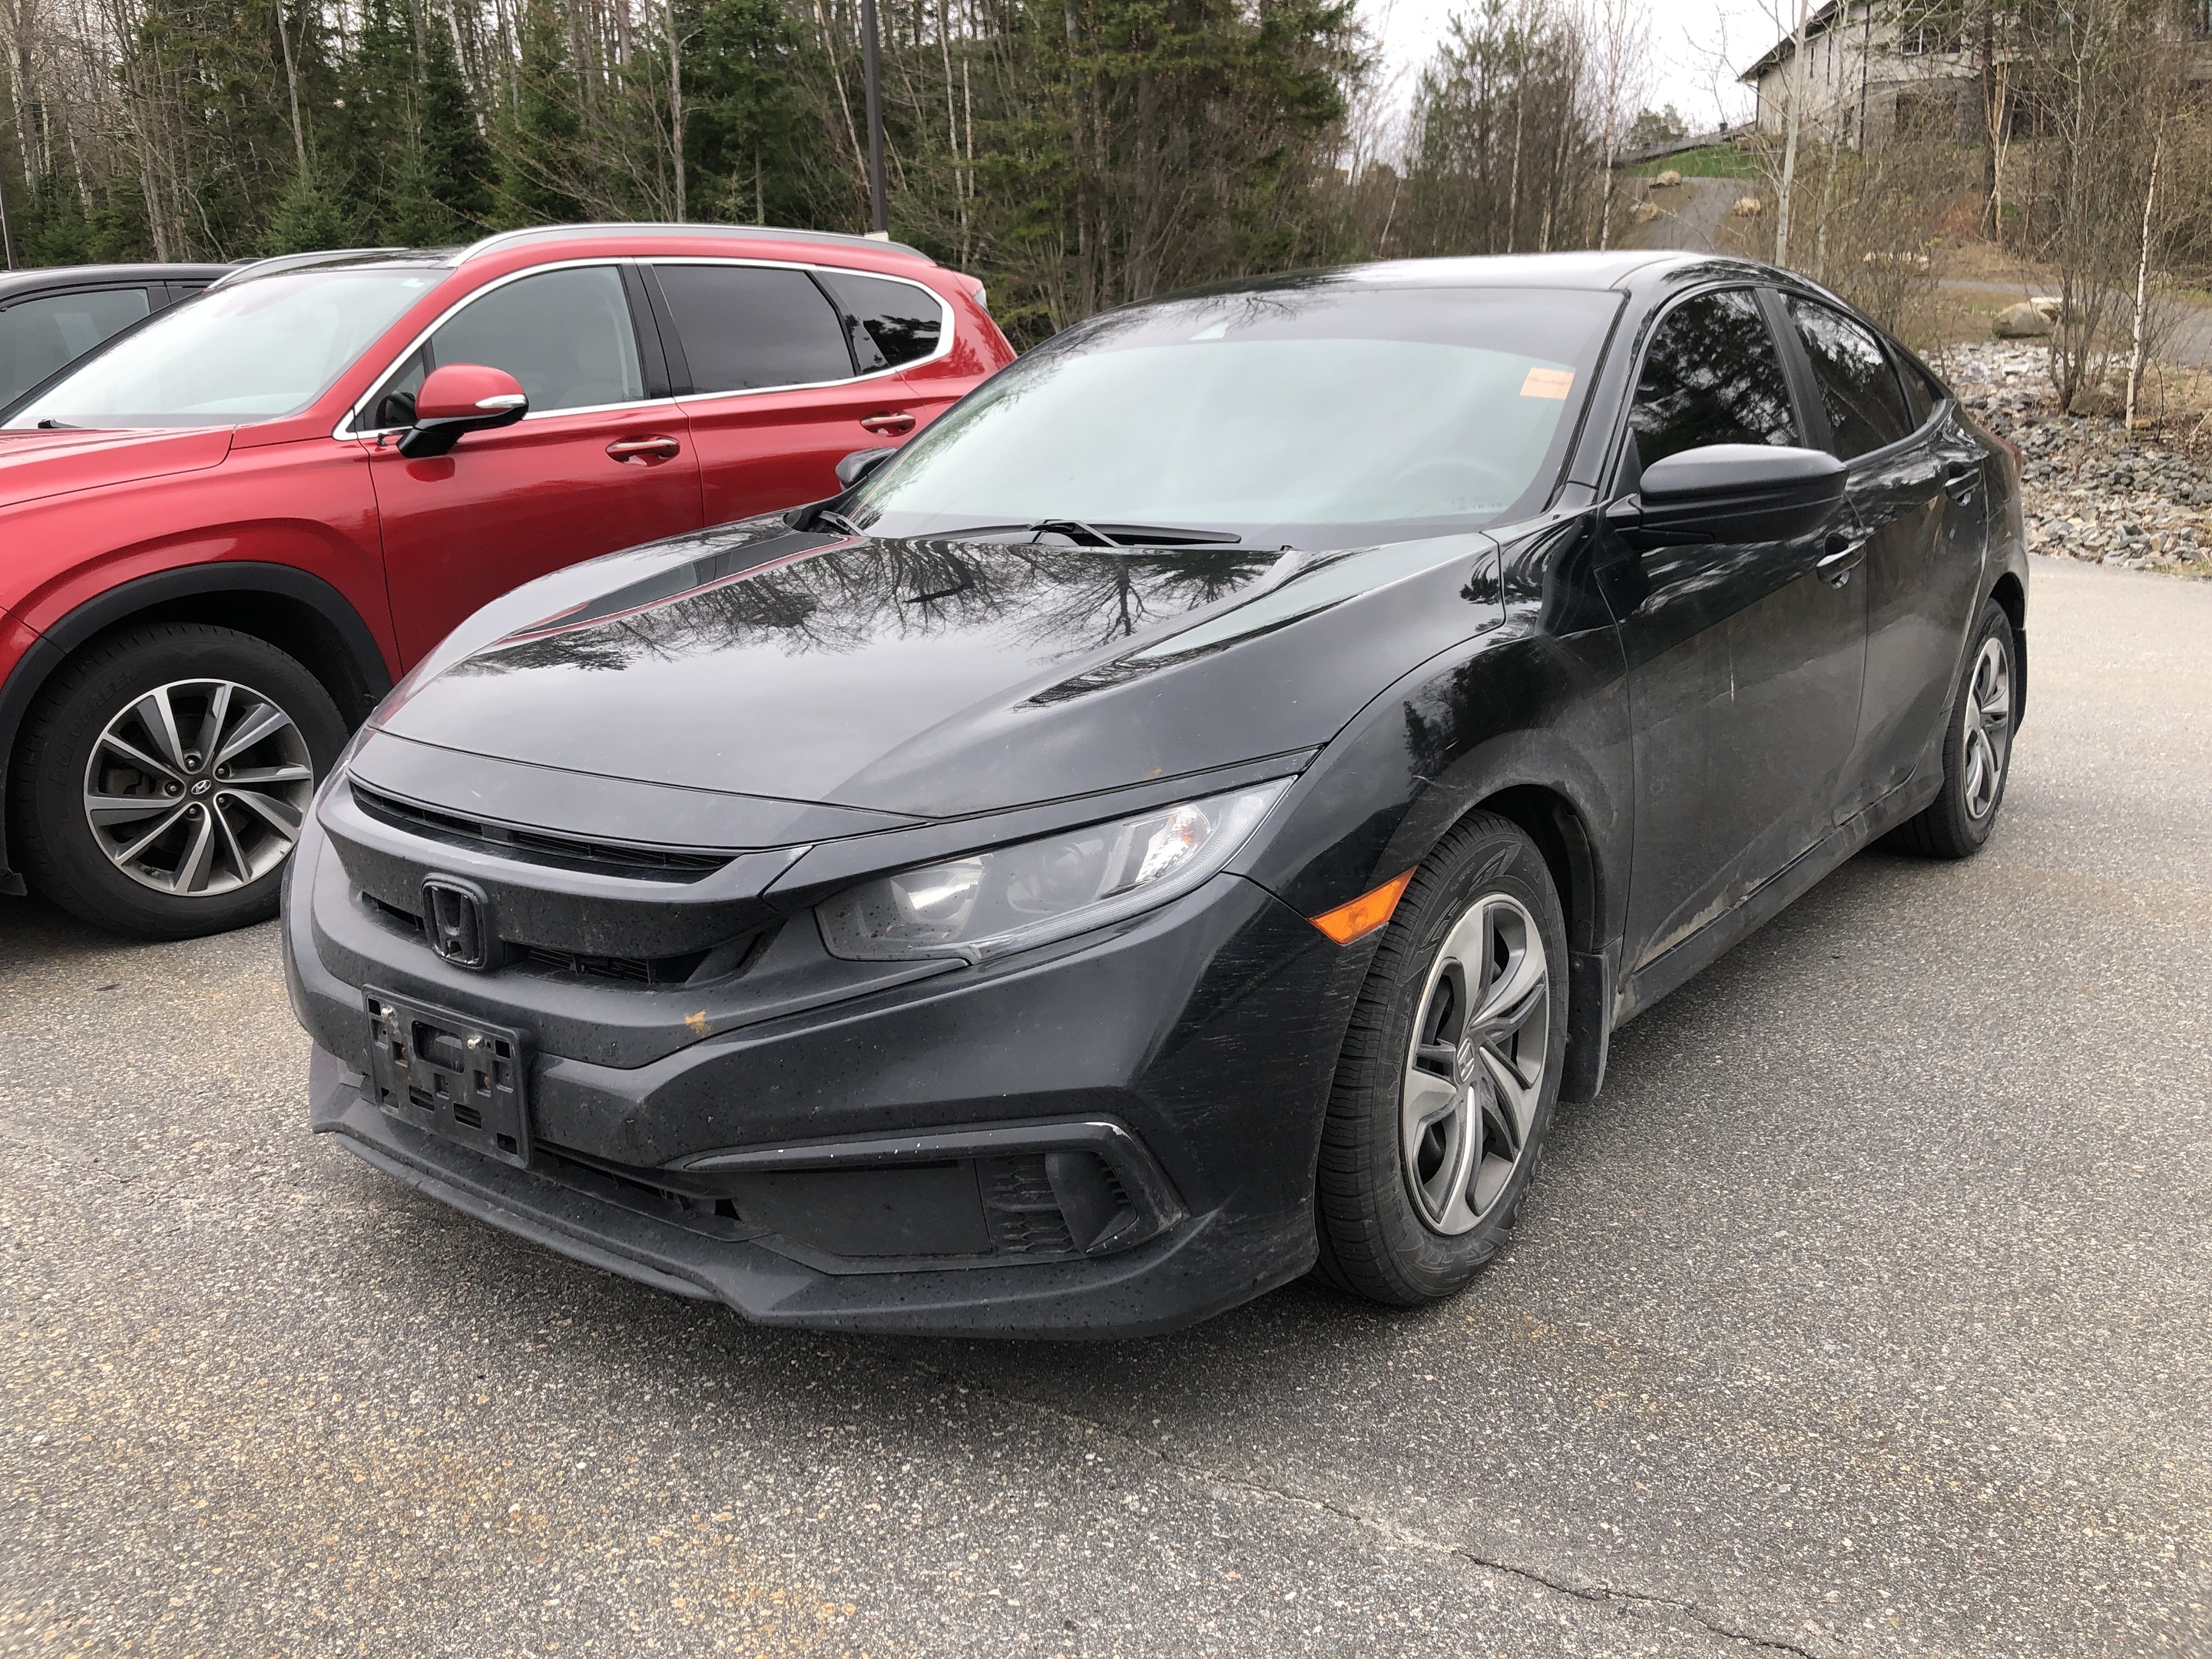 2019 Honda Civic LX- CPO-Honda sensing tech, Heated front seats